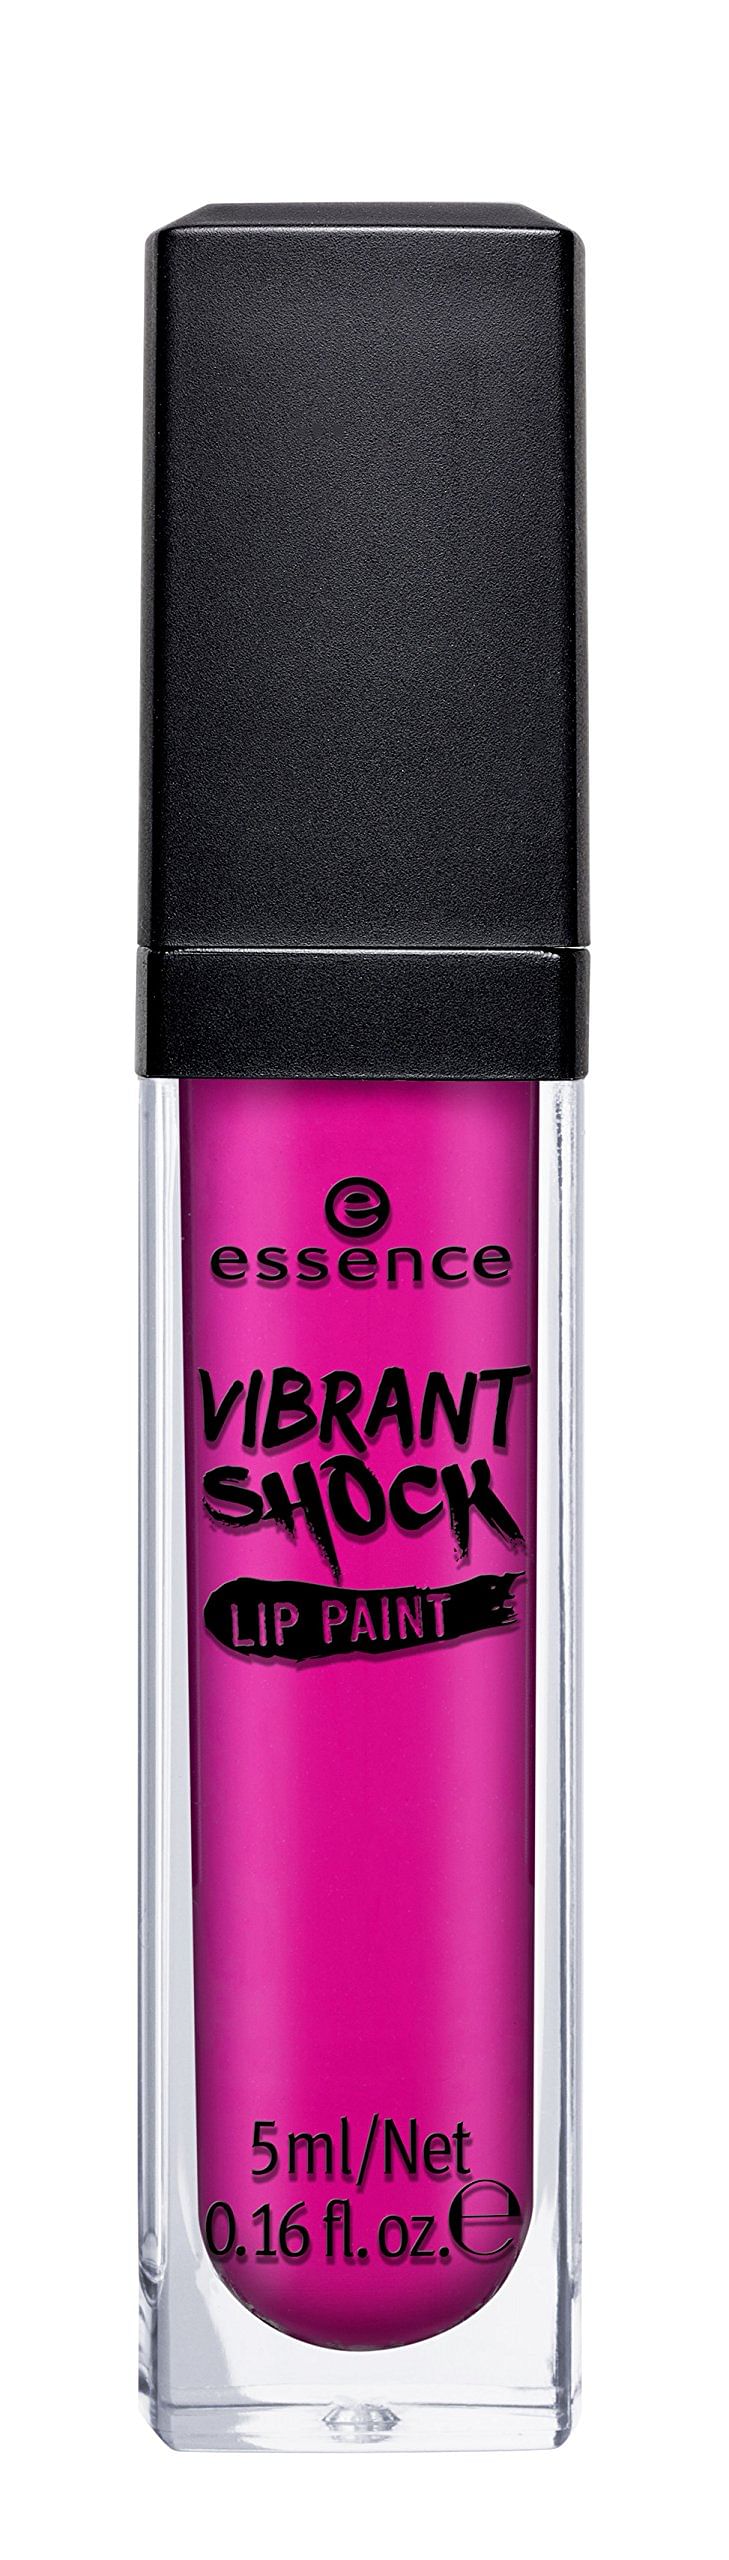 Essence Vibrant Shock Lip Paint 04 Twisted Sister